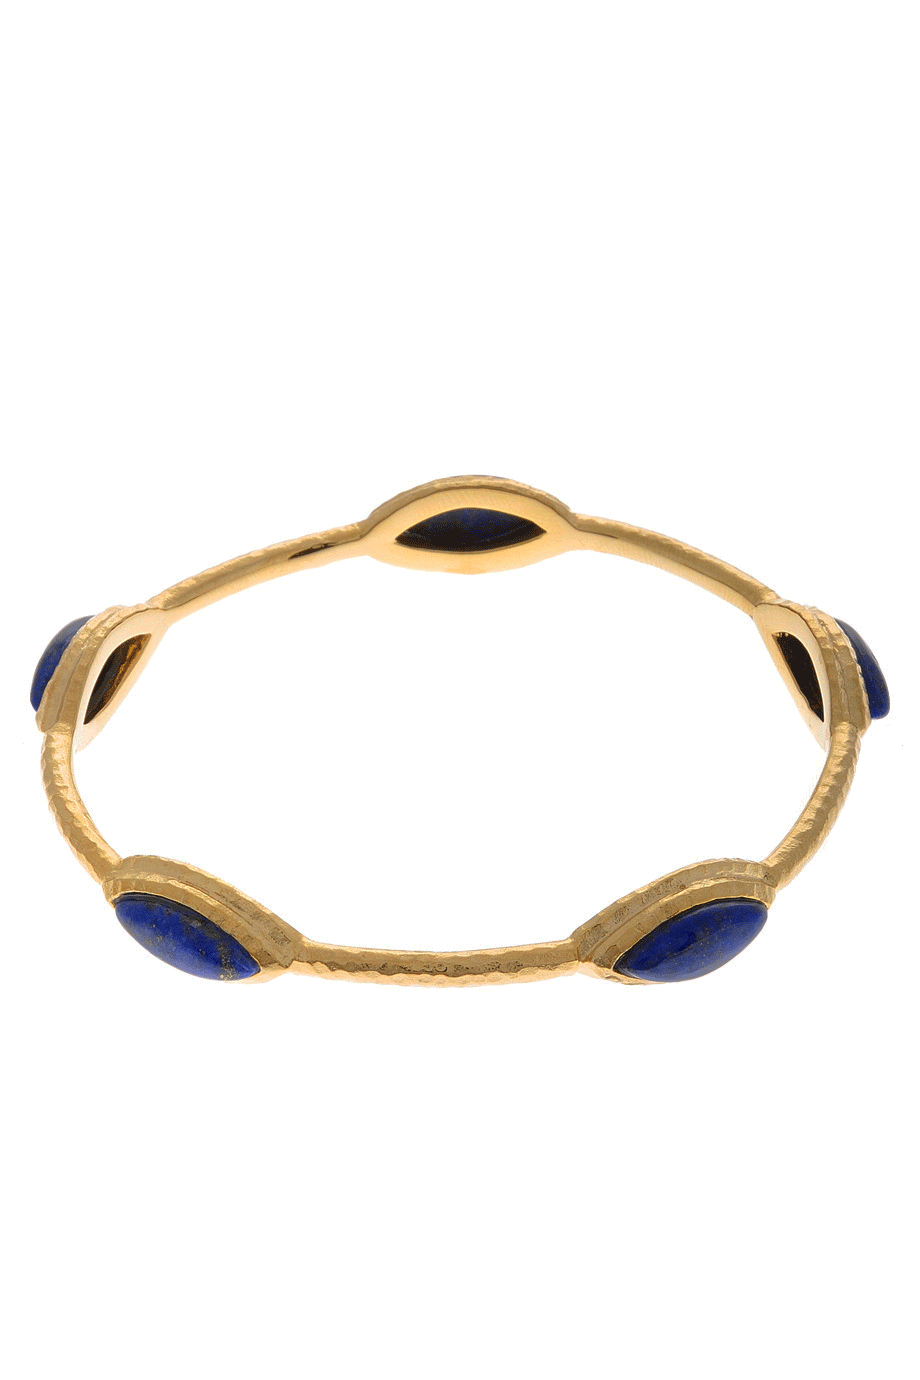 Nile Nymph Blue Bracelet with Lapis Stones